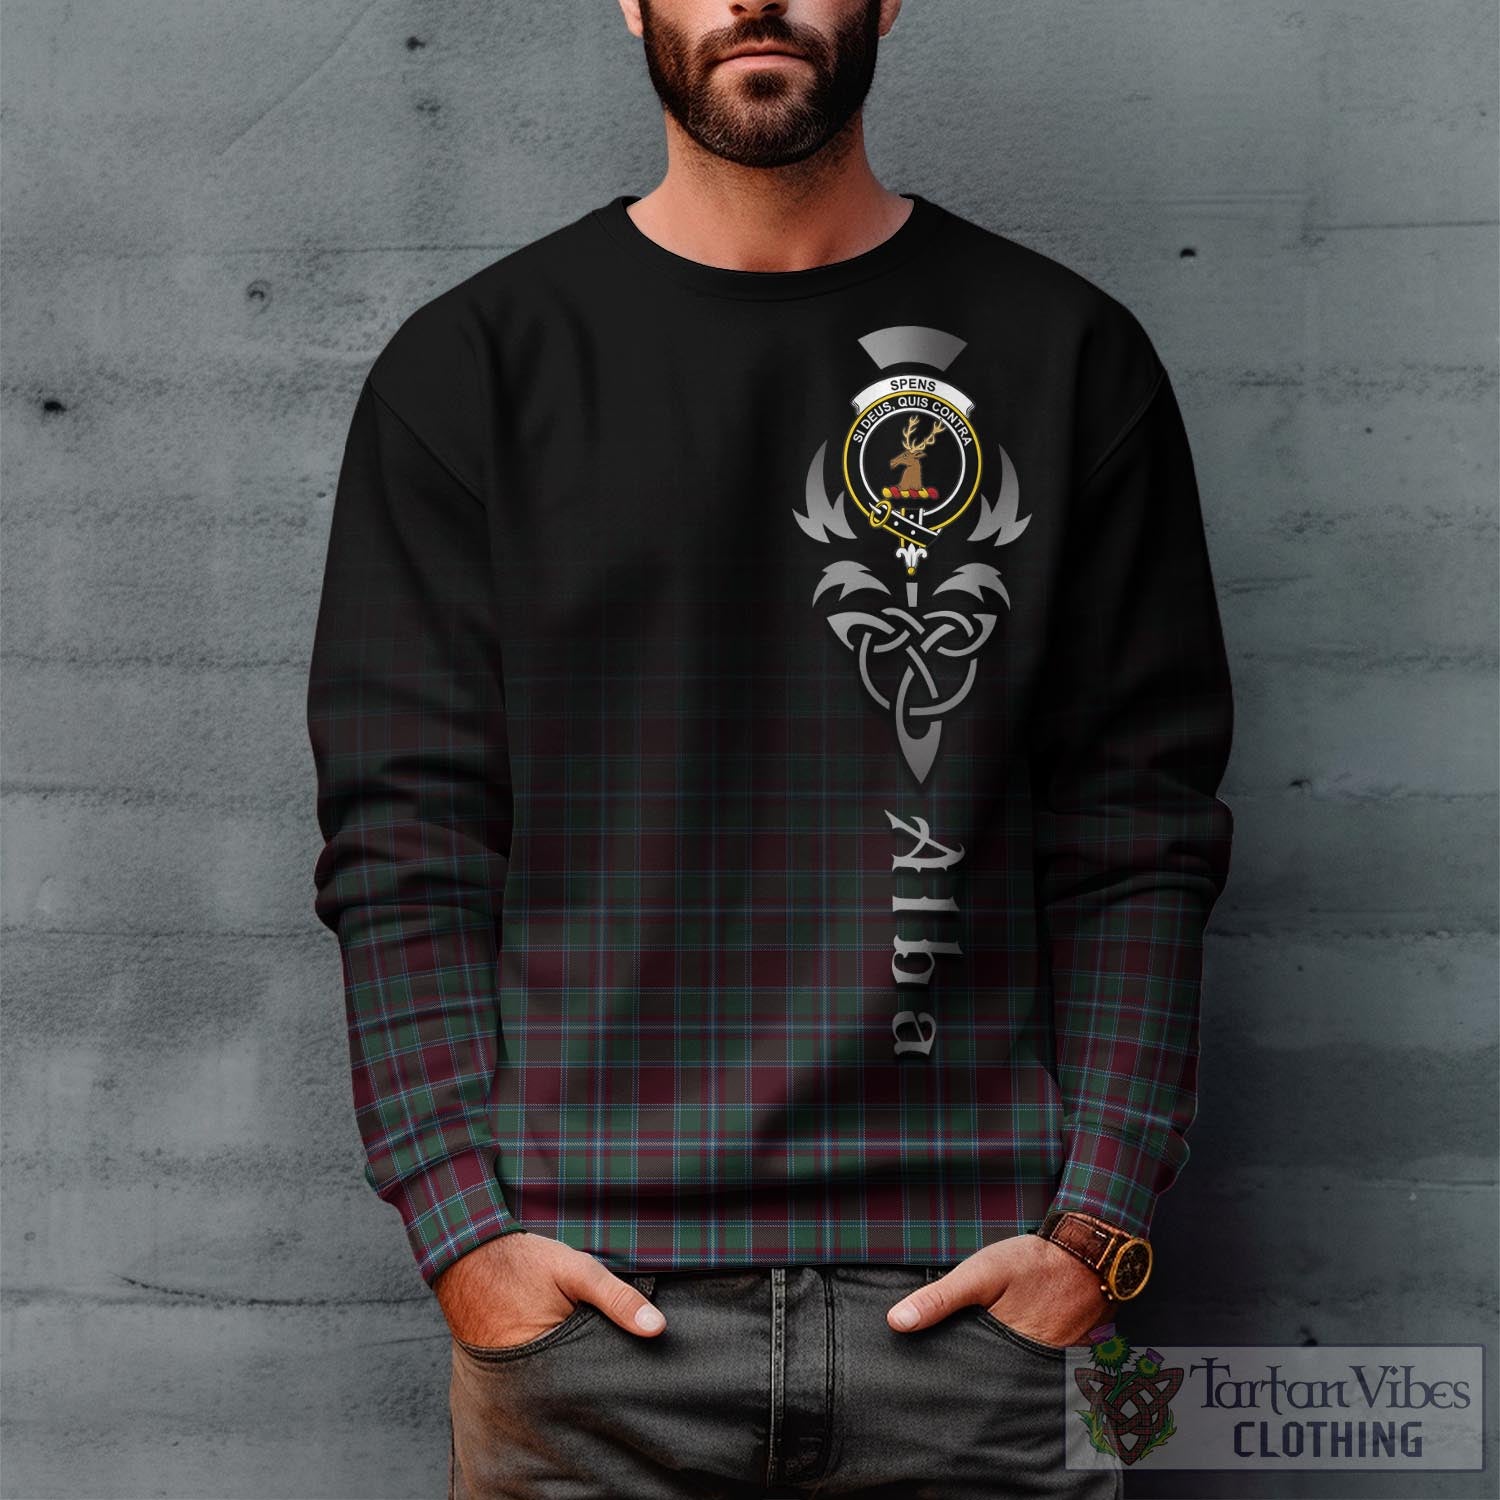 Tartan Vibes Clothing Spens (Spence) Tartan Sweatshirt Featuring Alba Gu Brath Family Crest Celtic Inspired